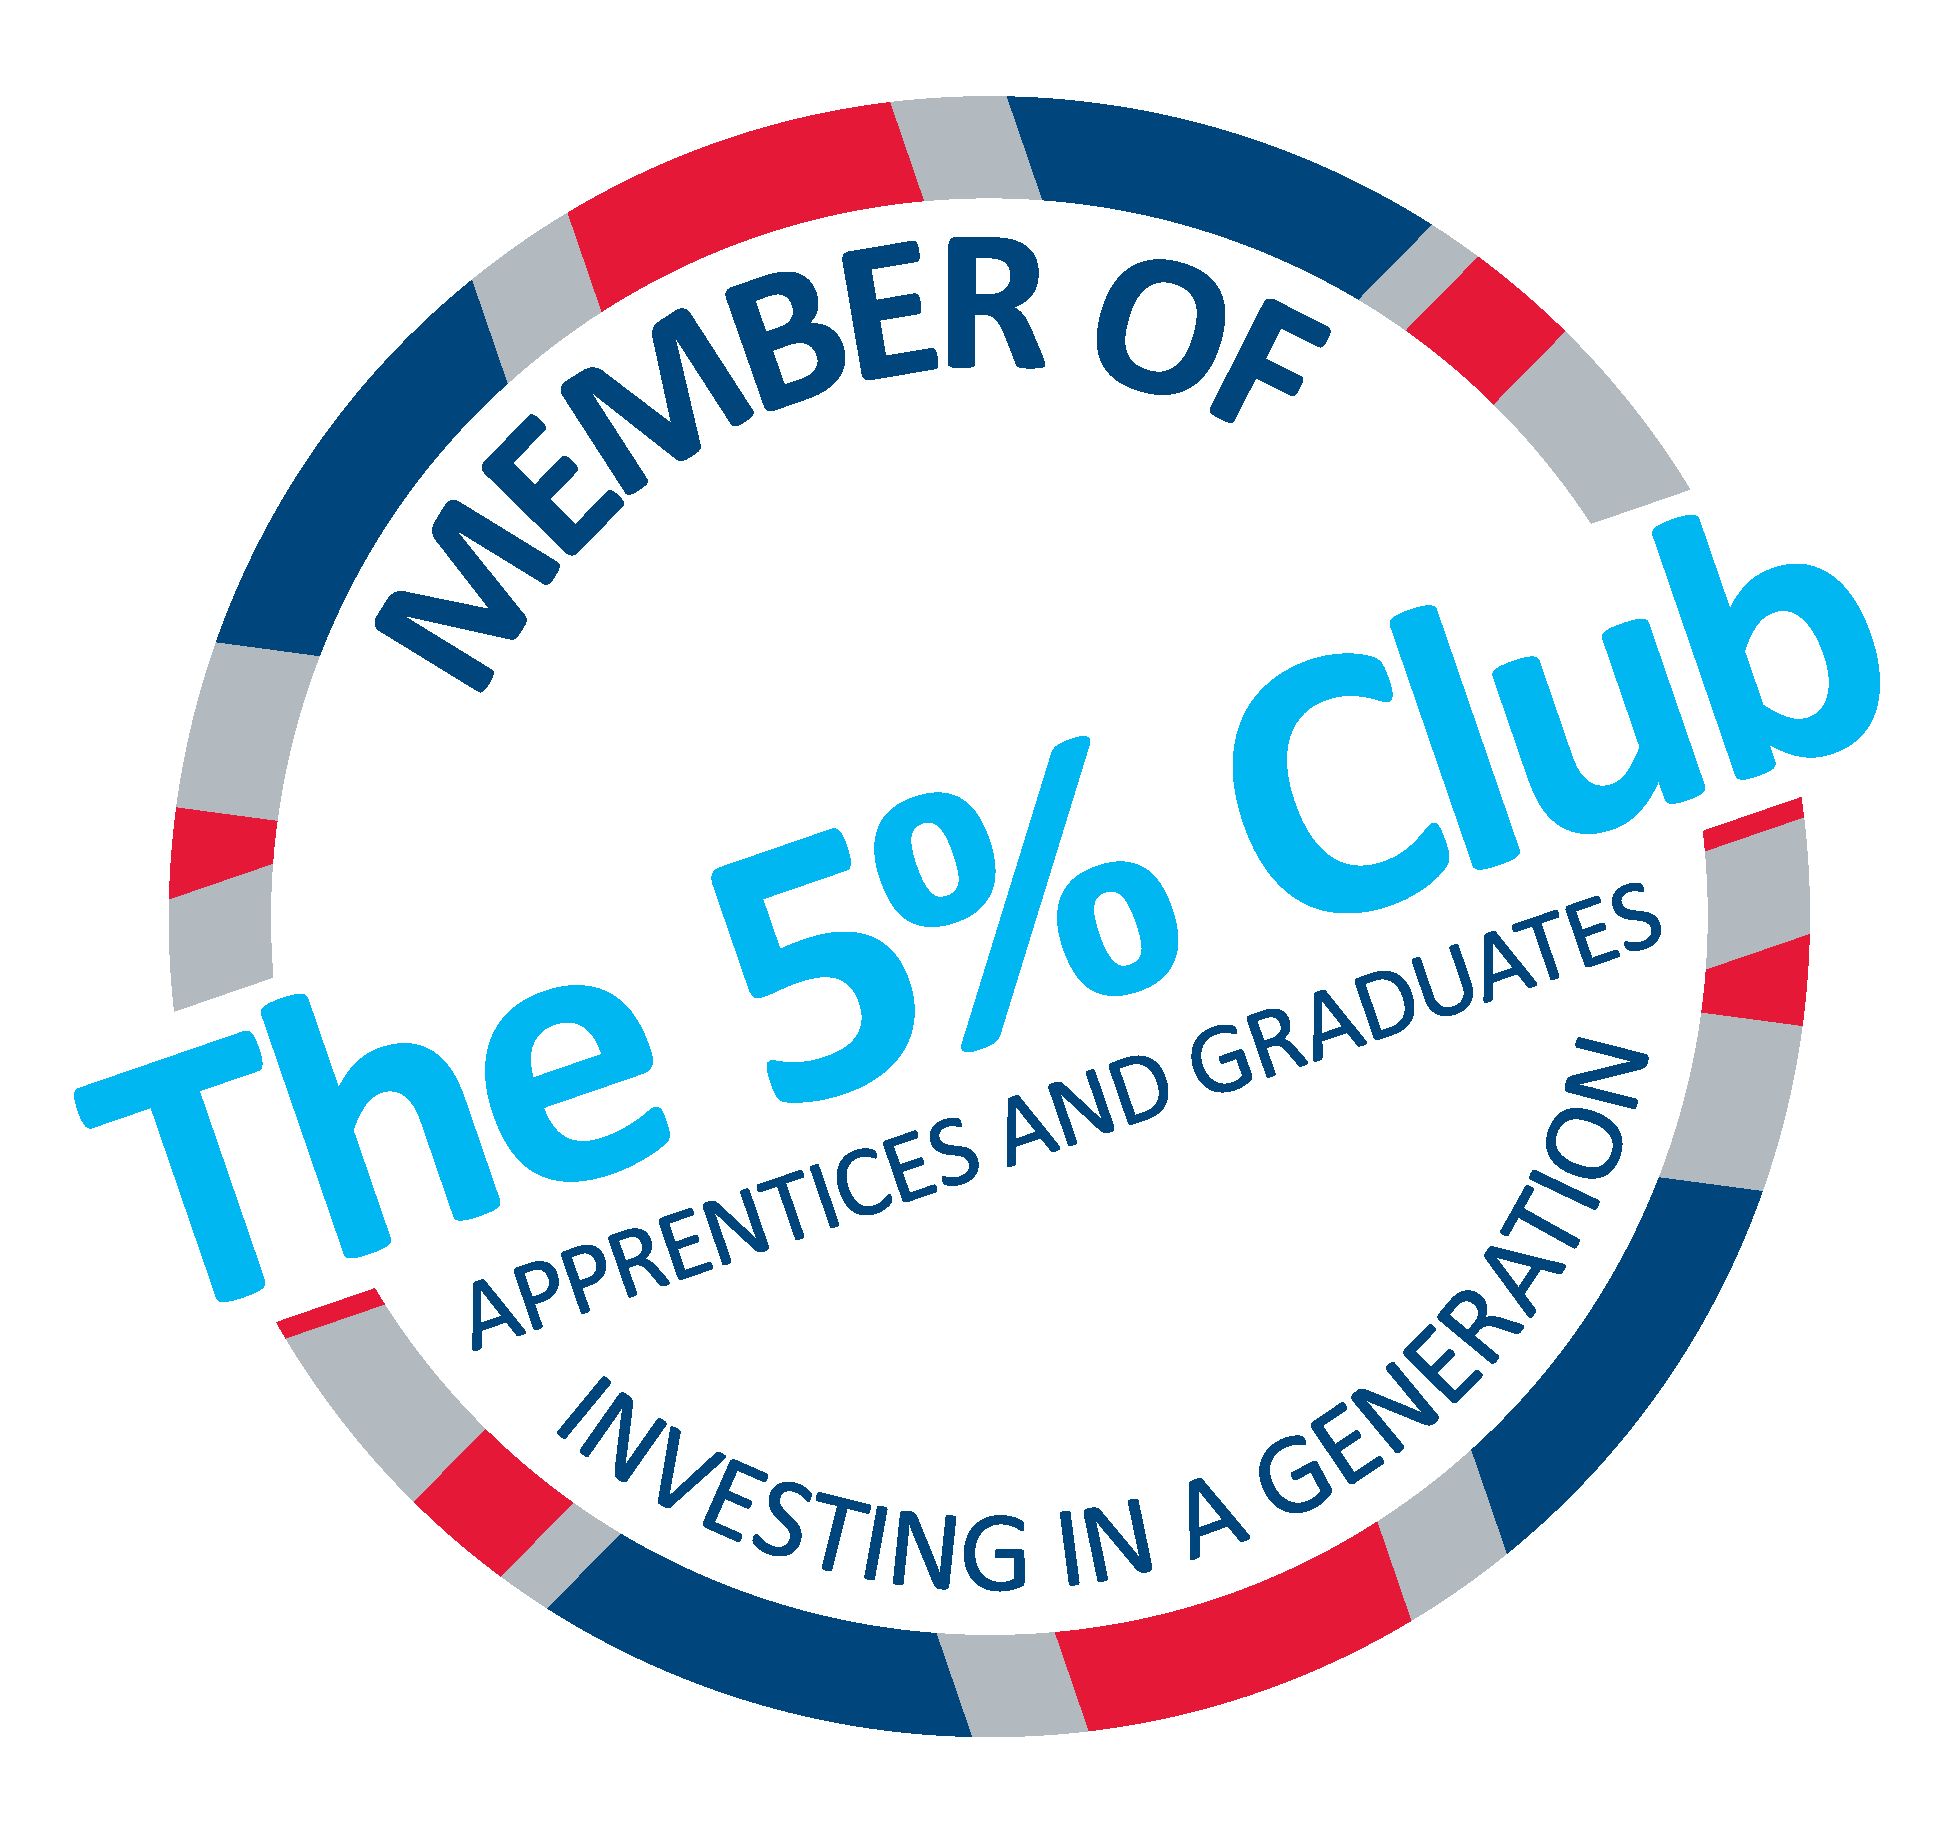 5% Club